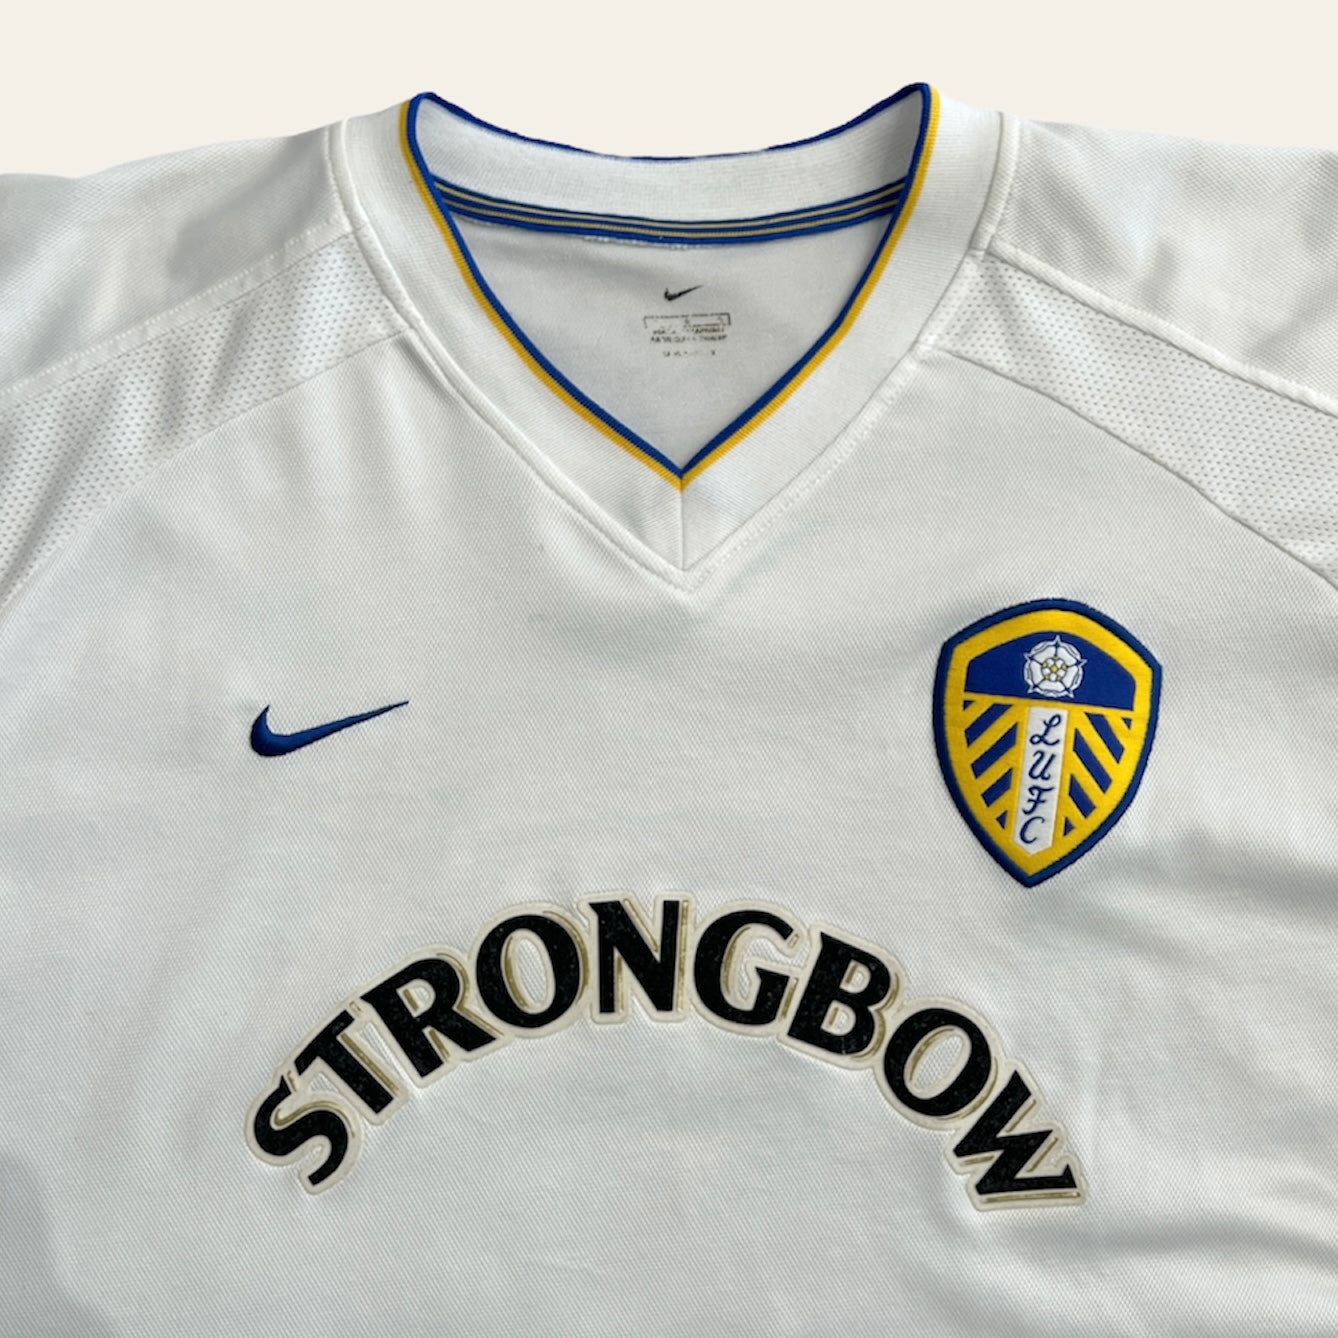 00/01 Leeds United Home Kit Size L